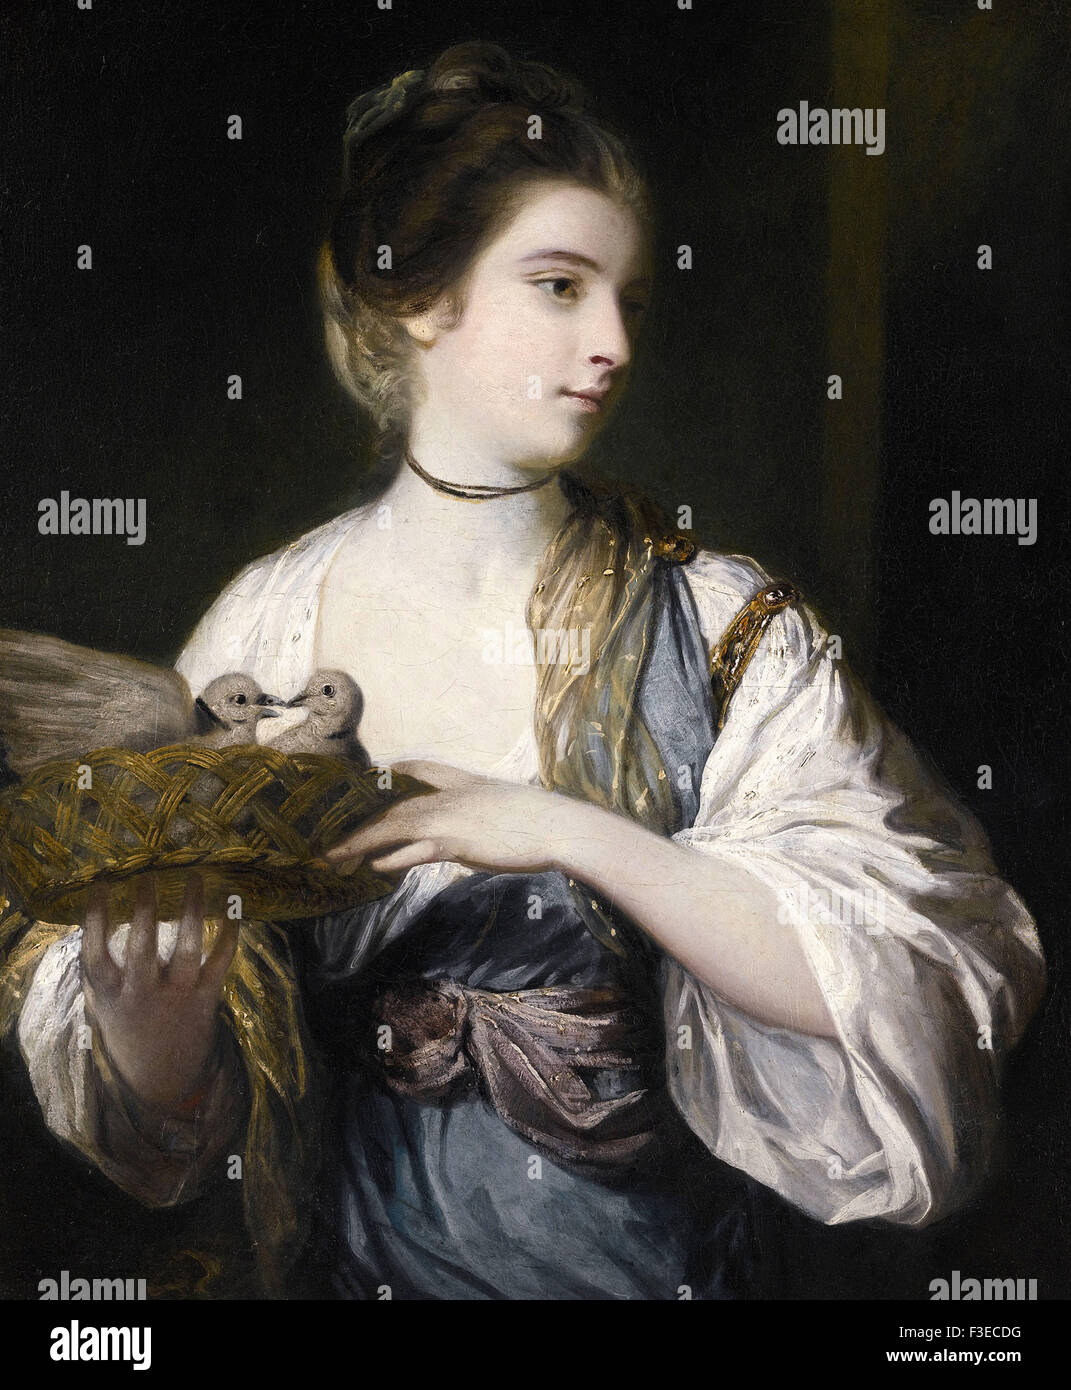 Sir Joshua Reynolds - Nancy Reynolds avec Colombes Banque D'Images